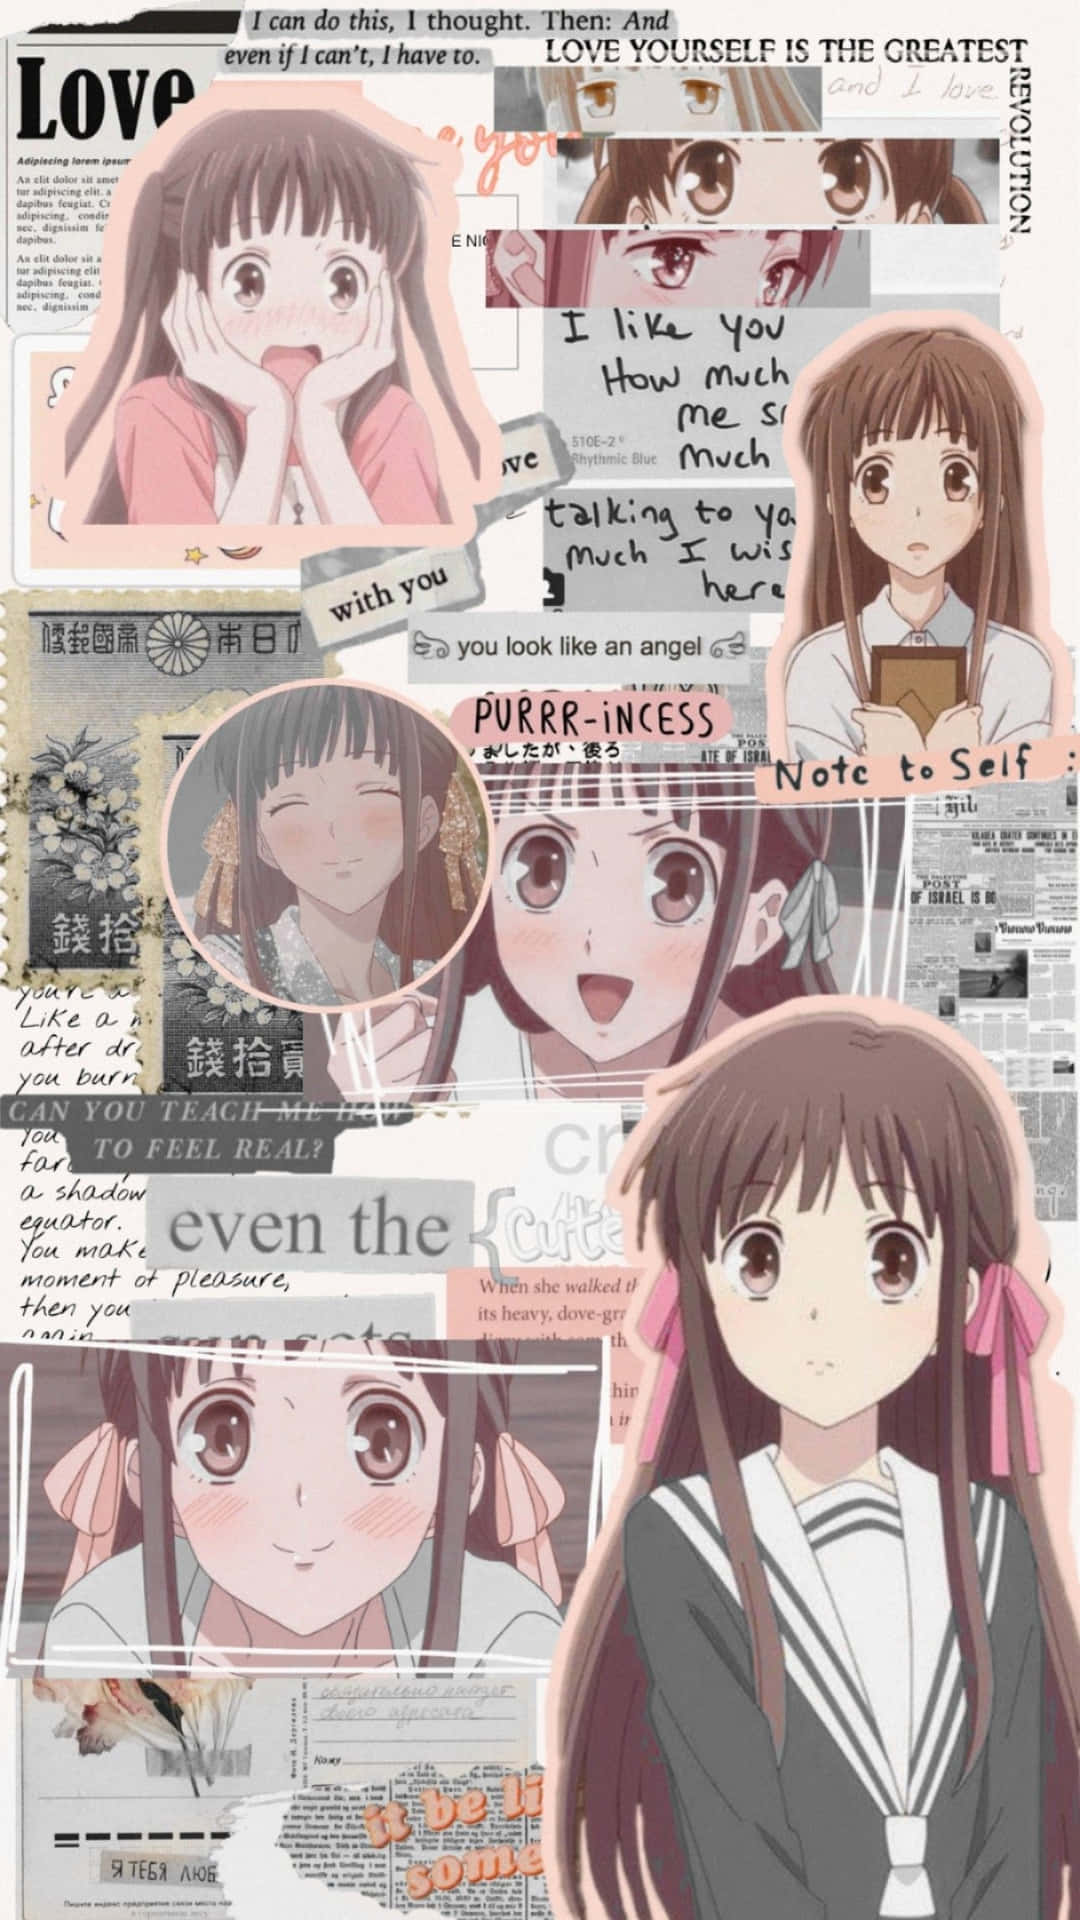 Download Tohru Honda Collage Fruits Basket Anime Wallpaper | Wallpapers.com